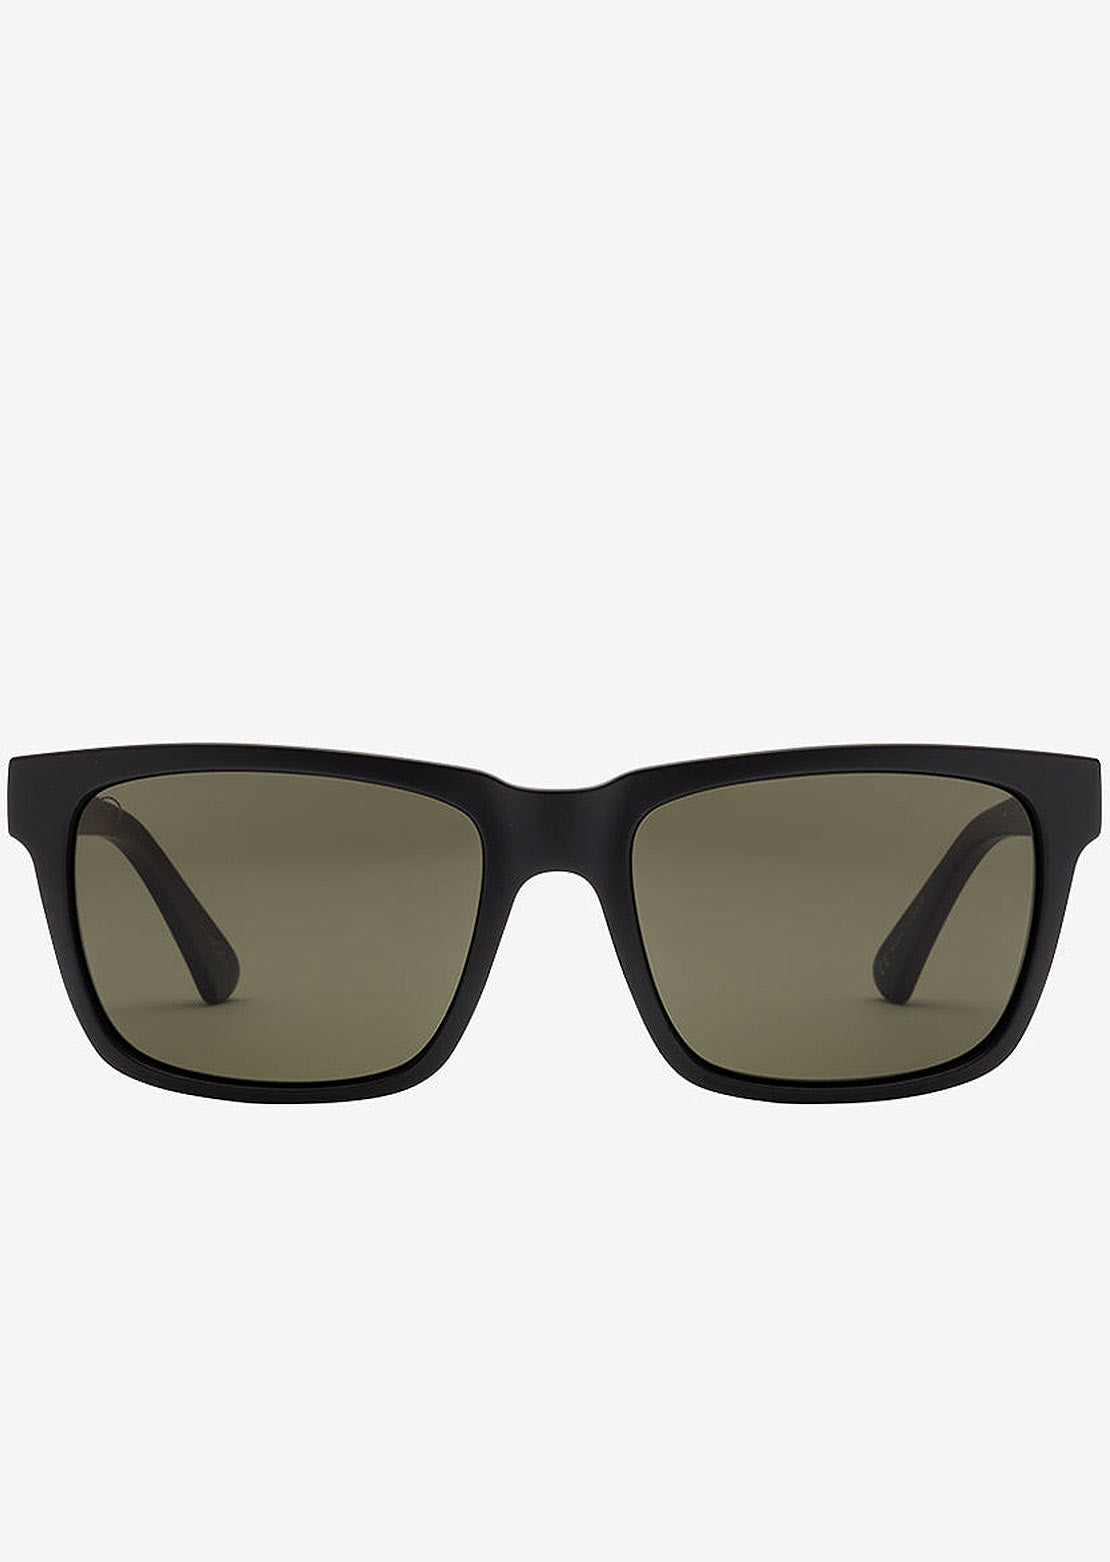 Electric Men's Swingarm XL Polarized Sunglasses - PRFO Sports